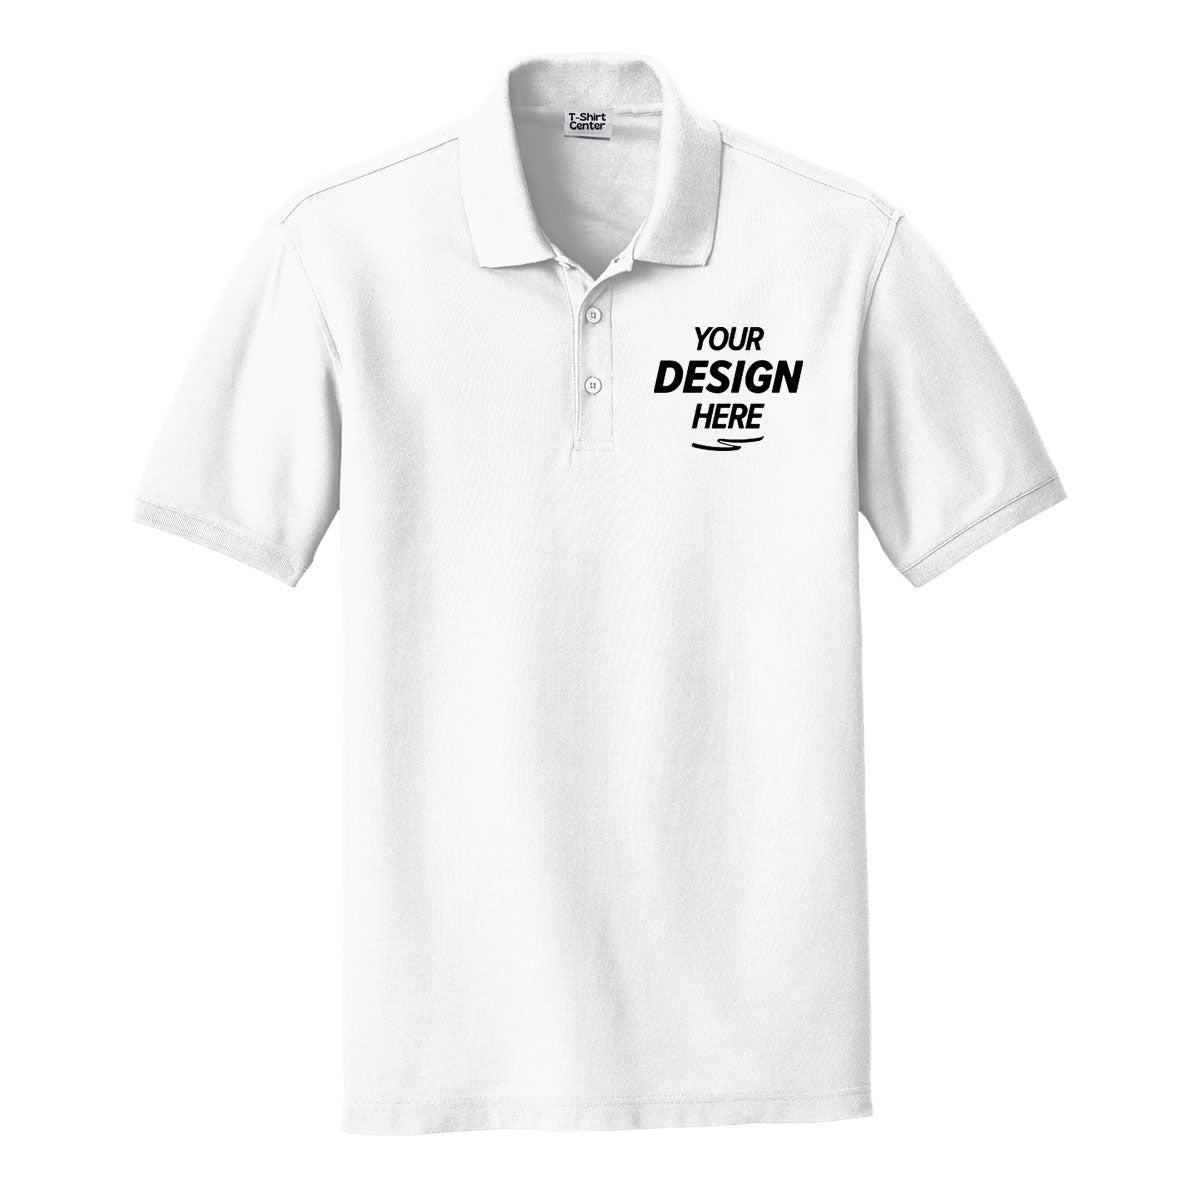 50 Cotton Polo Shirts ($689) + Free shipping